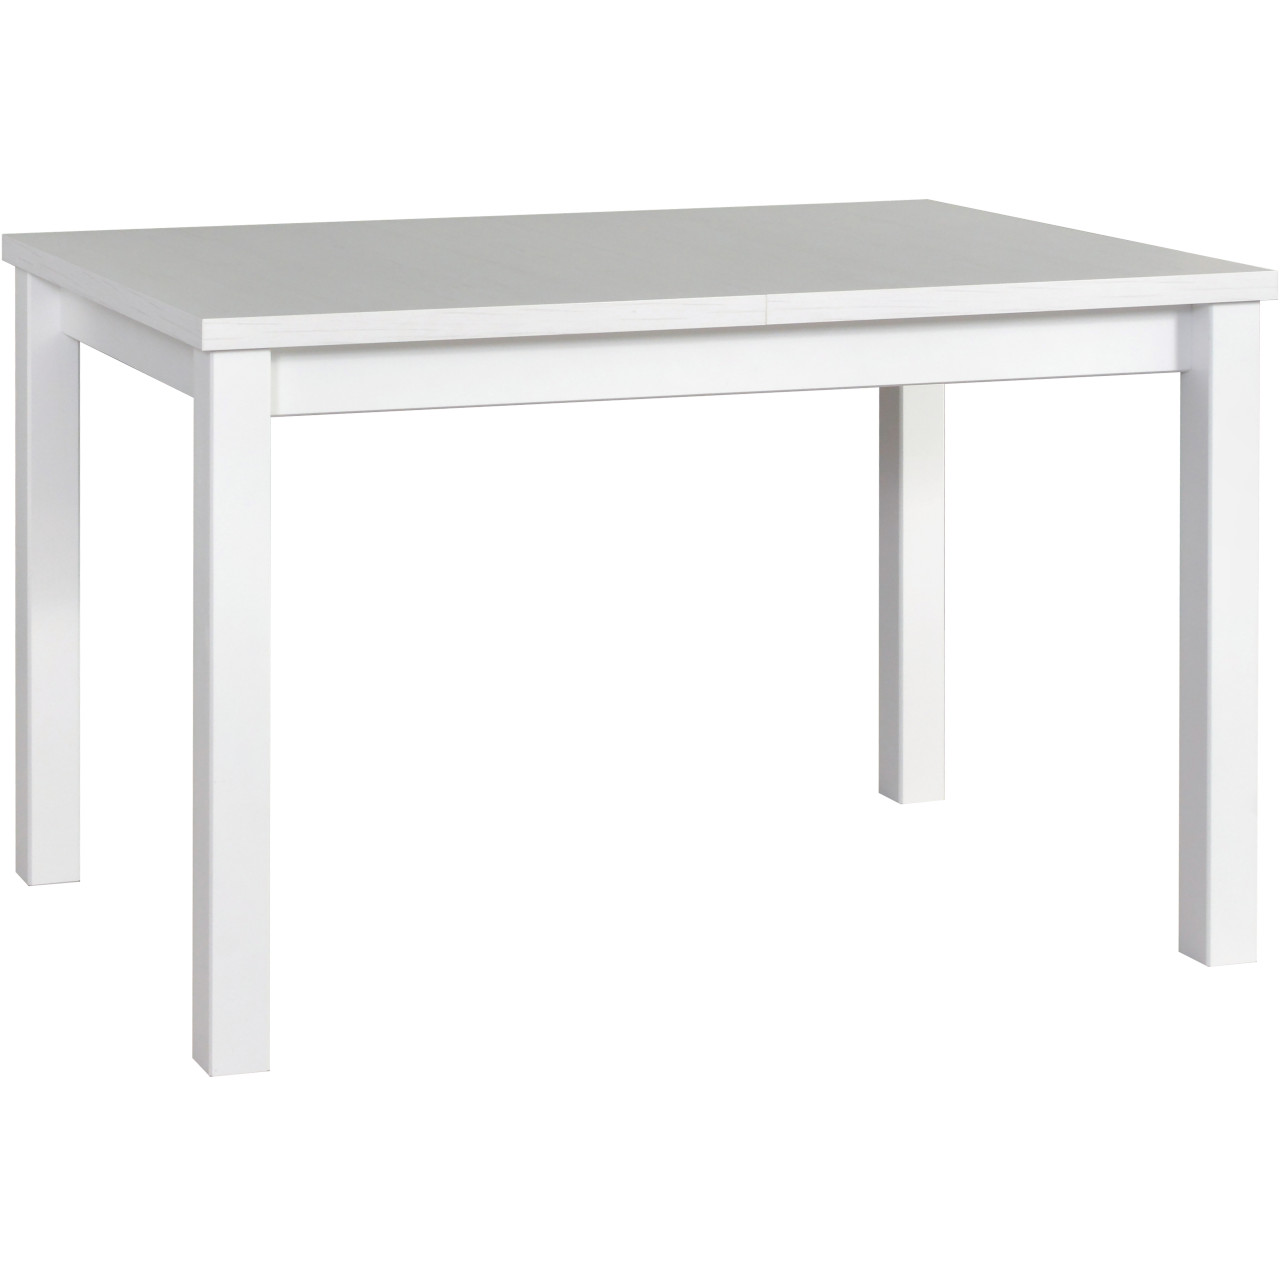 Table MAX 5 80x120/150 white laminate